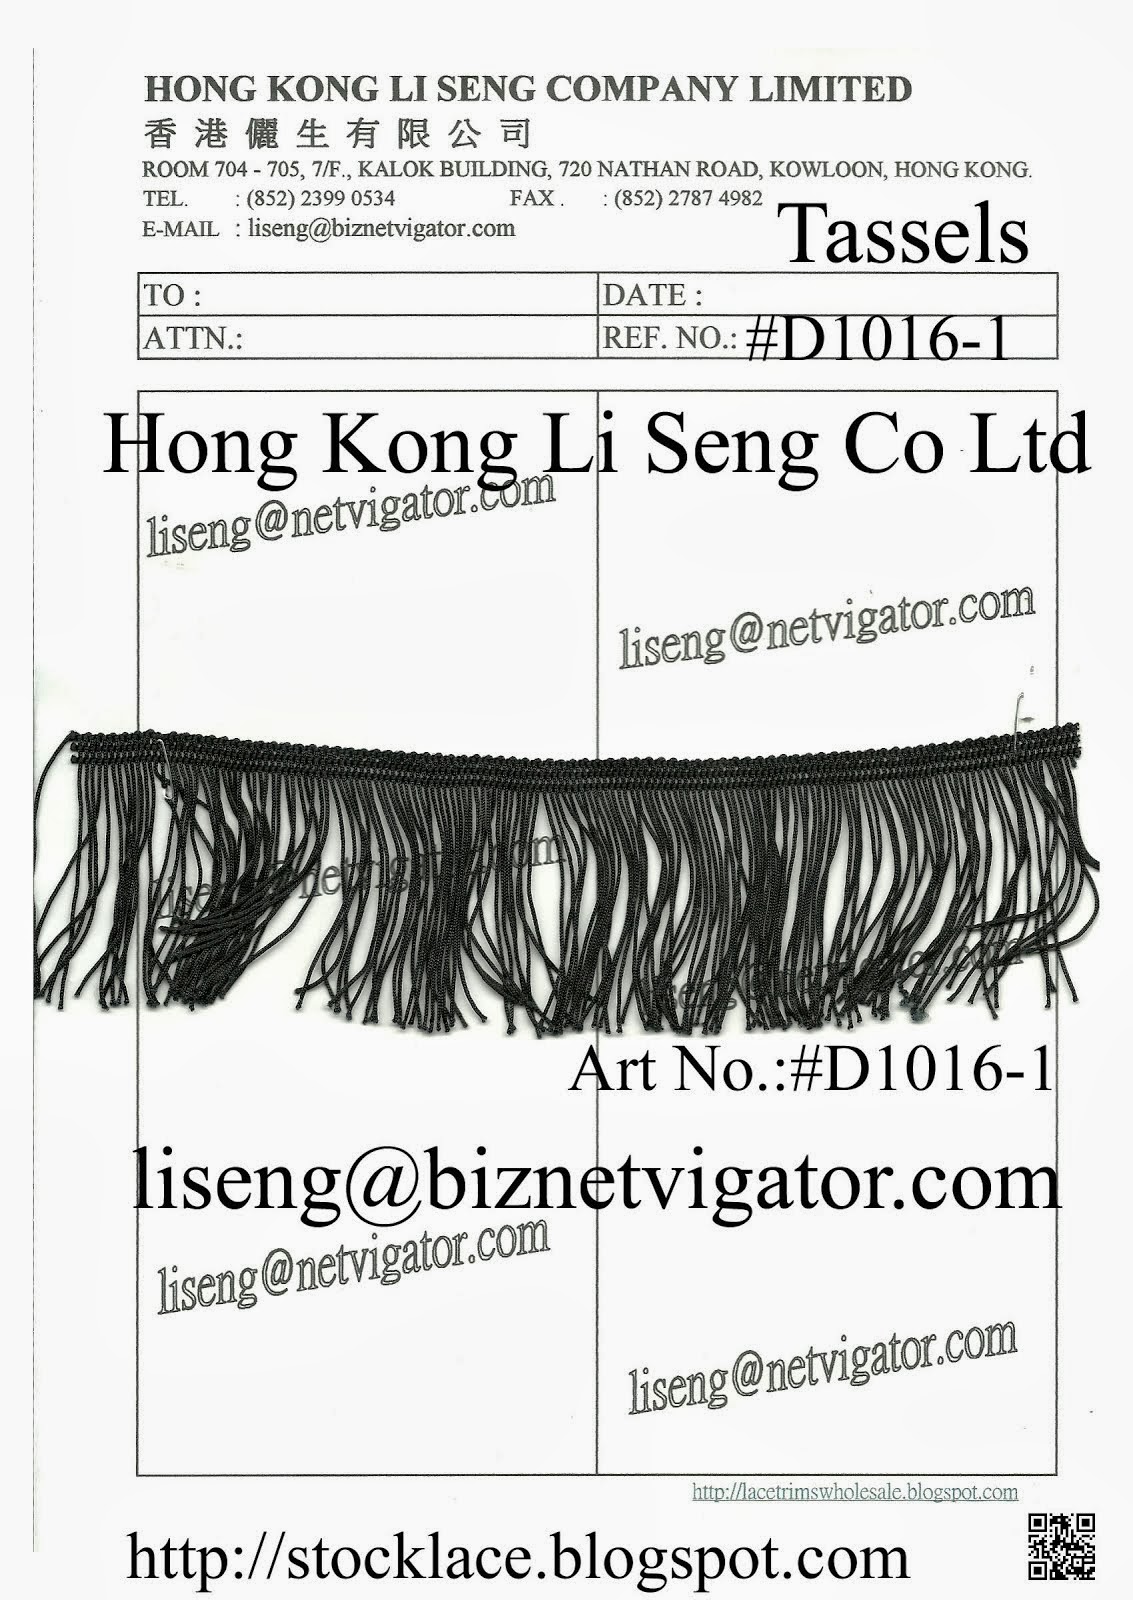 Black Tassels Manufacturer Wholesale and Supplier - Hong Kong Li Seng Co Ltd